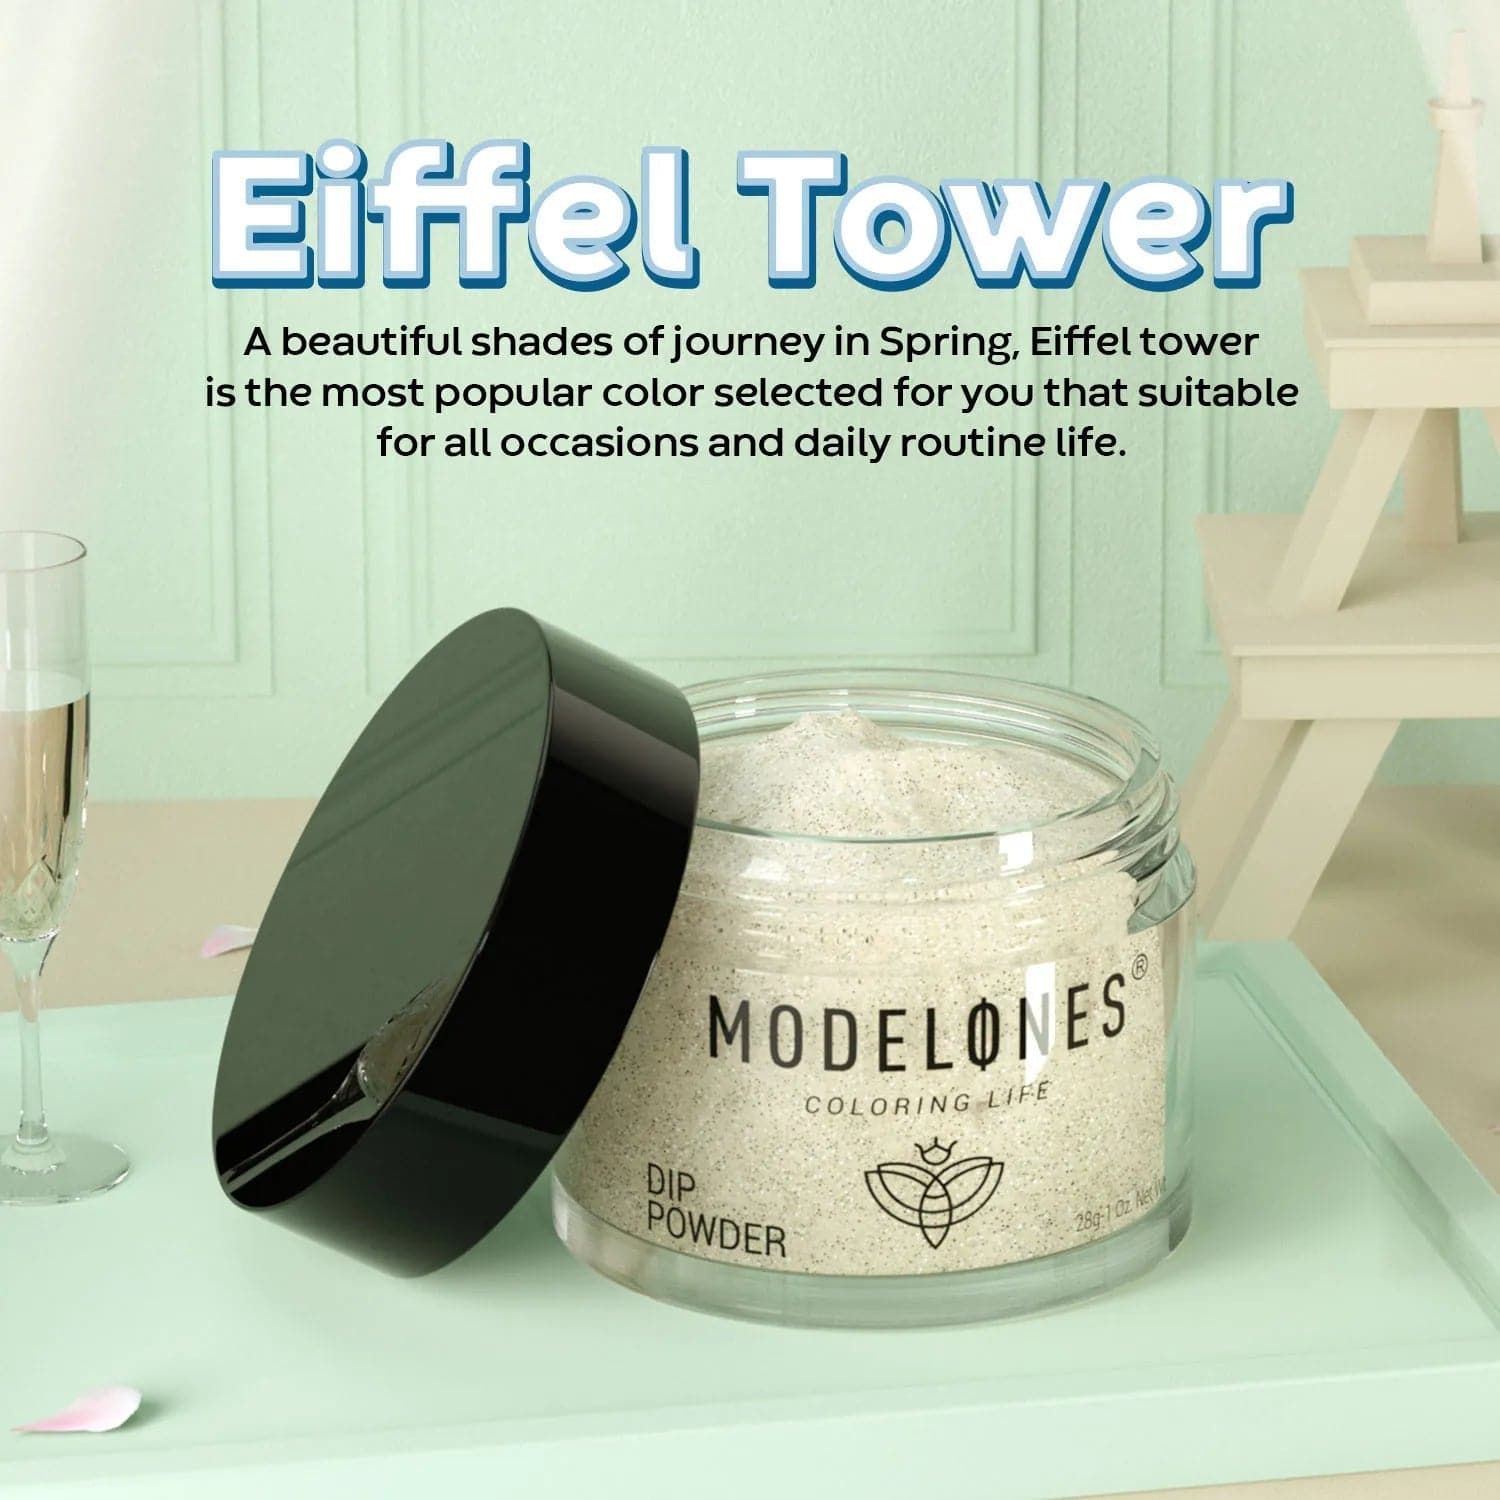 Eiffel Tower - Dipping Powder (1 oz) - MODELONES.com